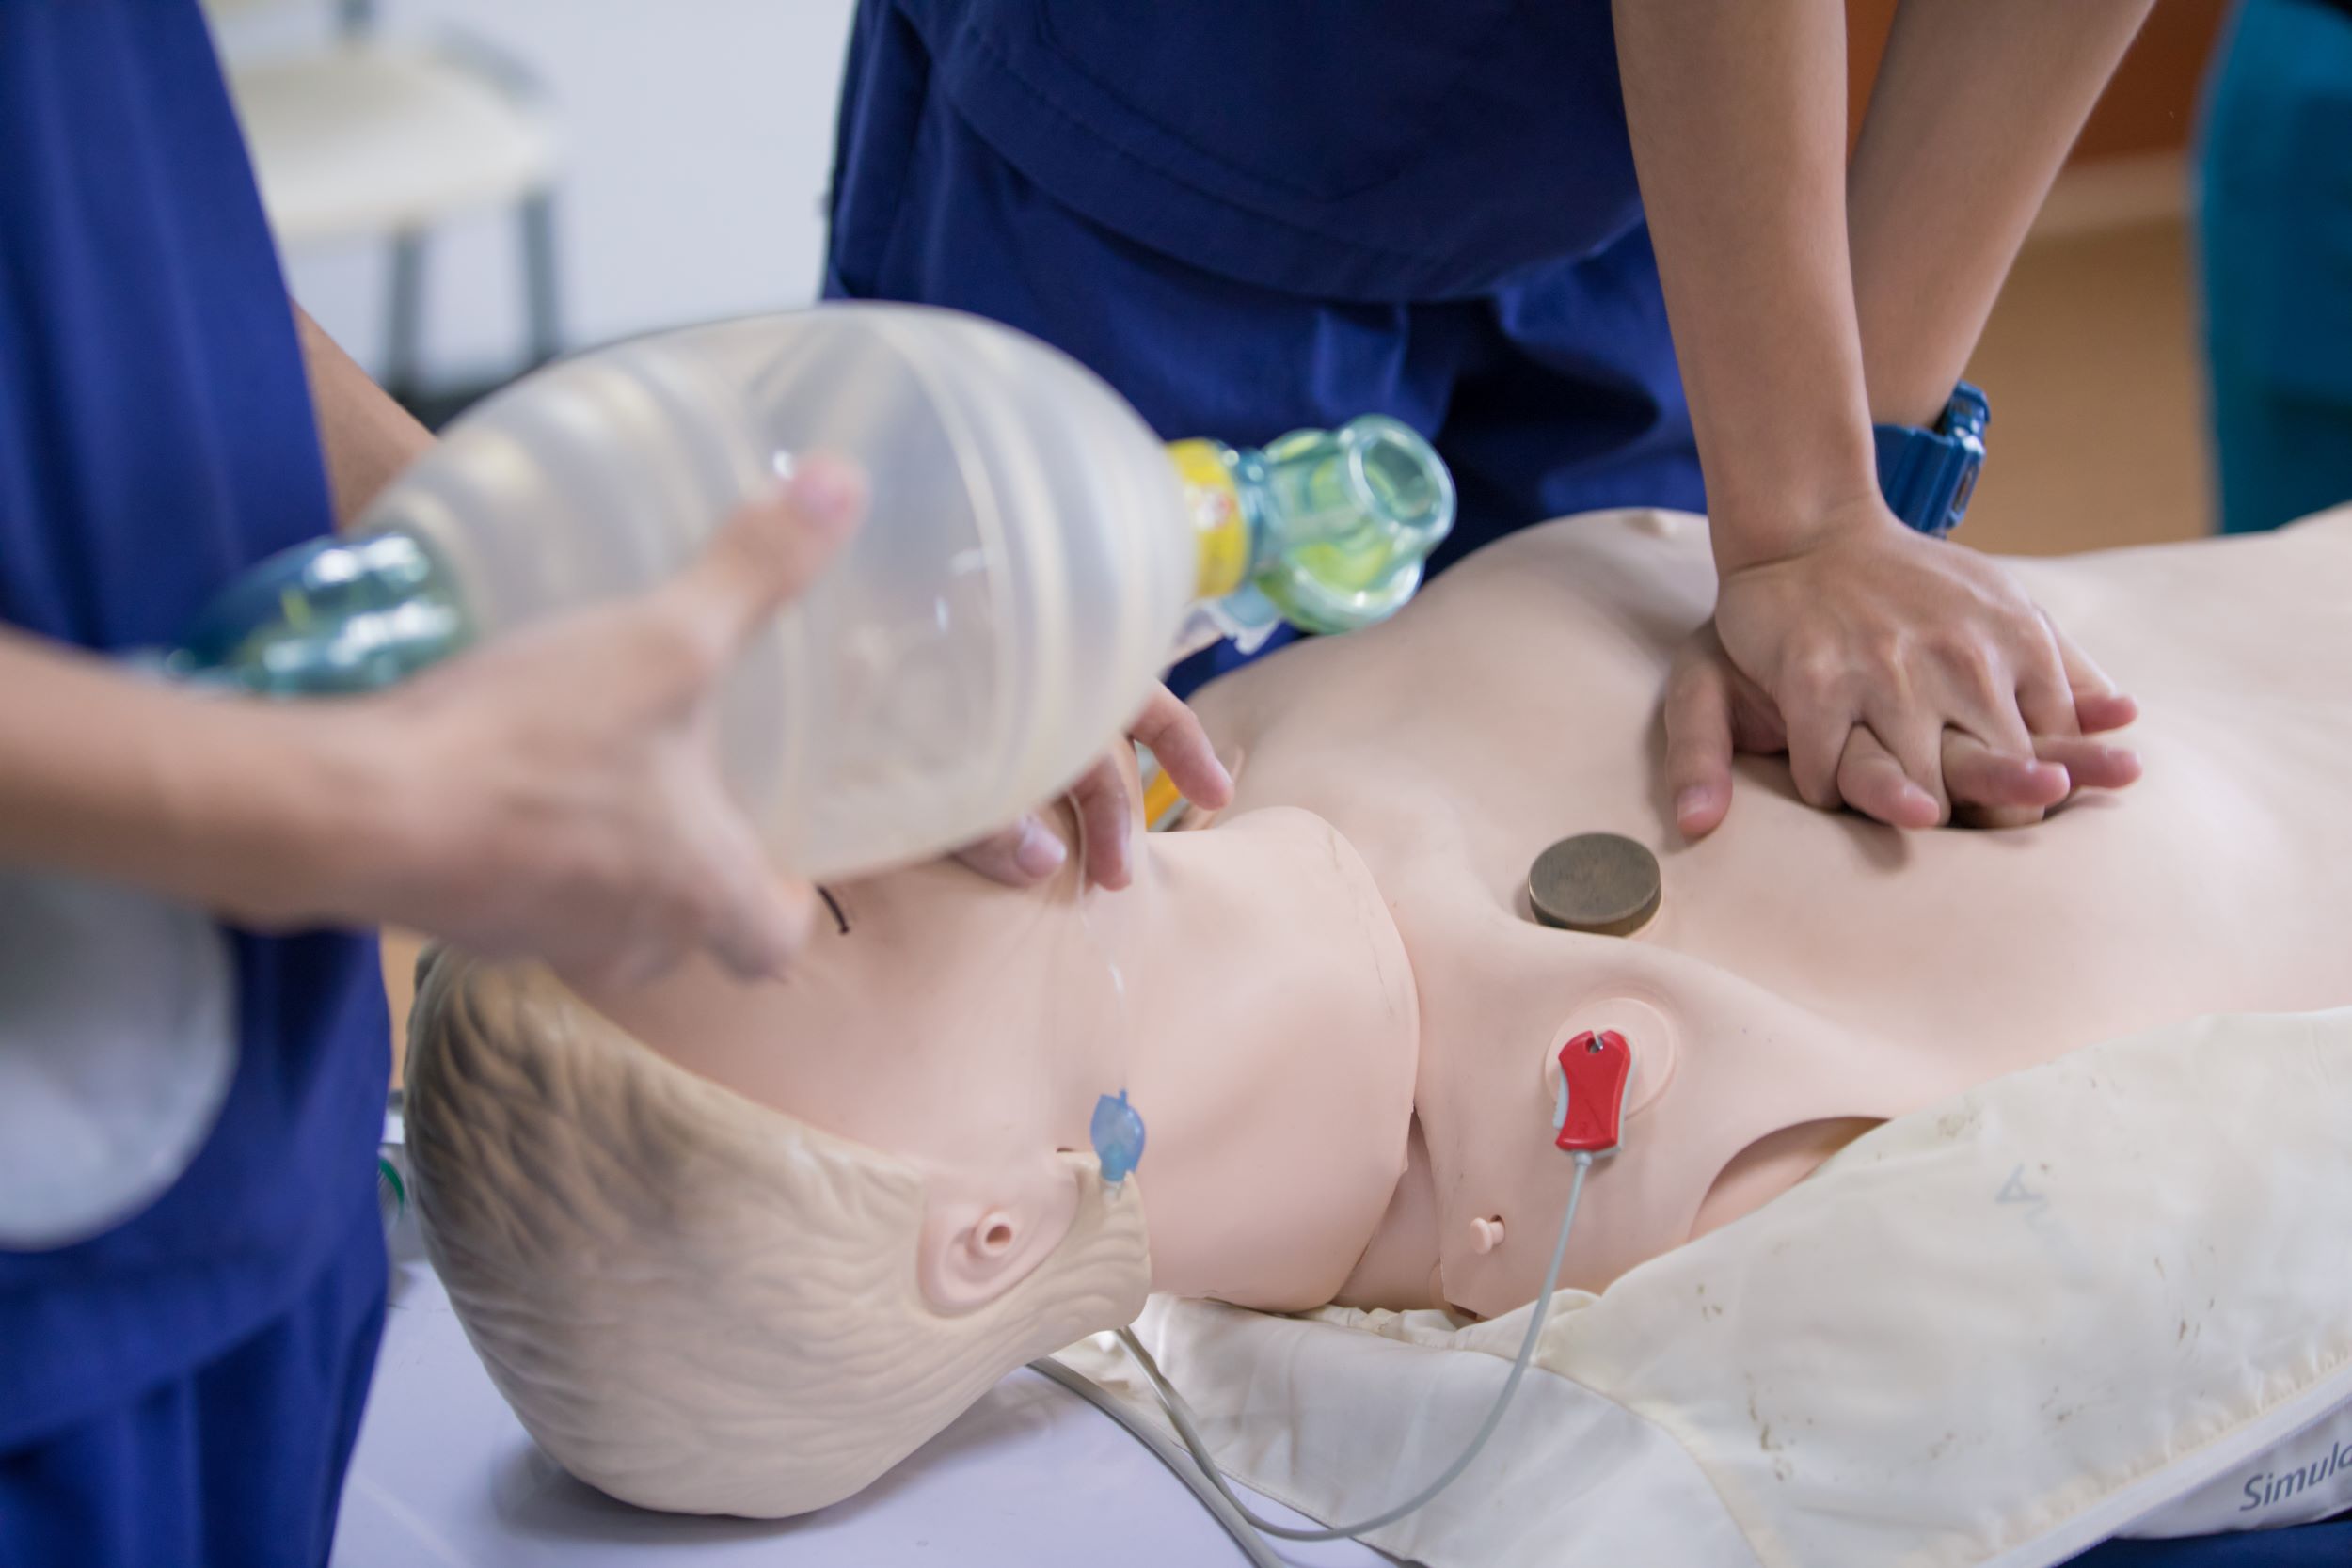 Survival Chances For Cardiac Arrest During CPR